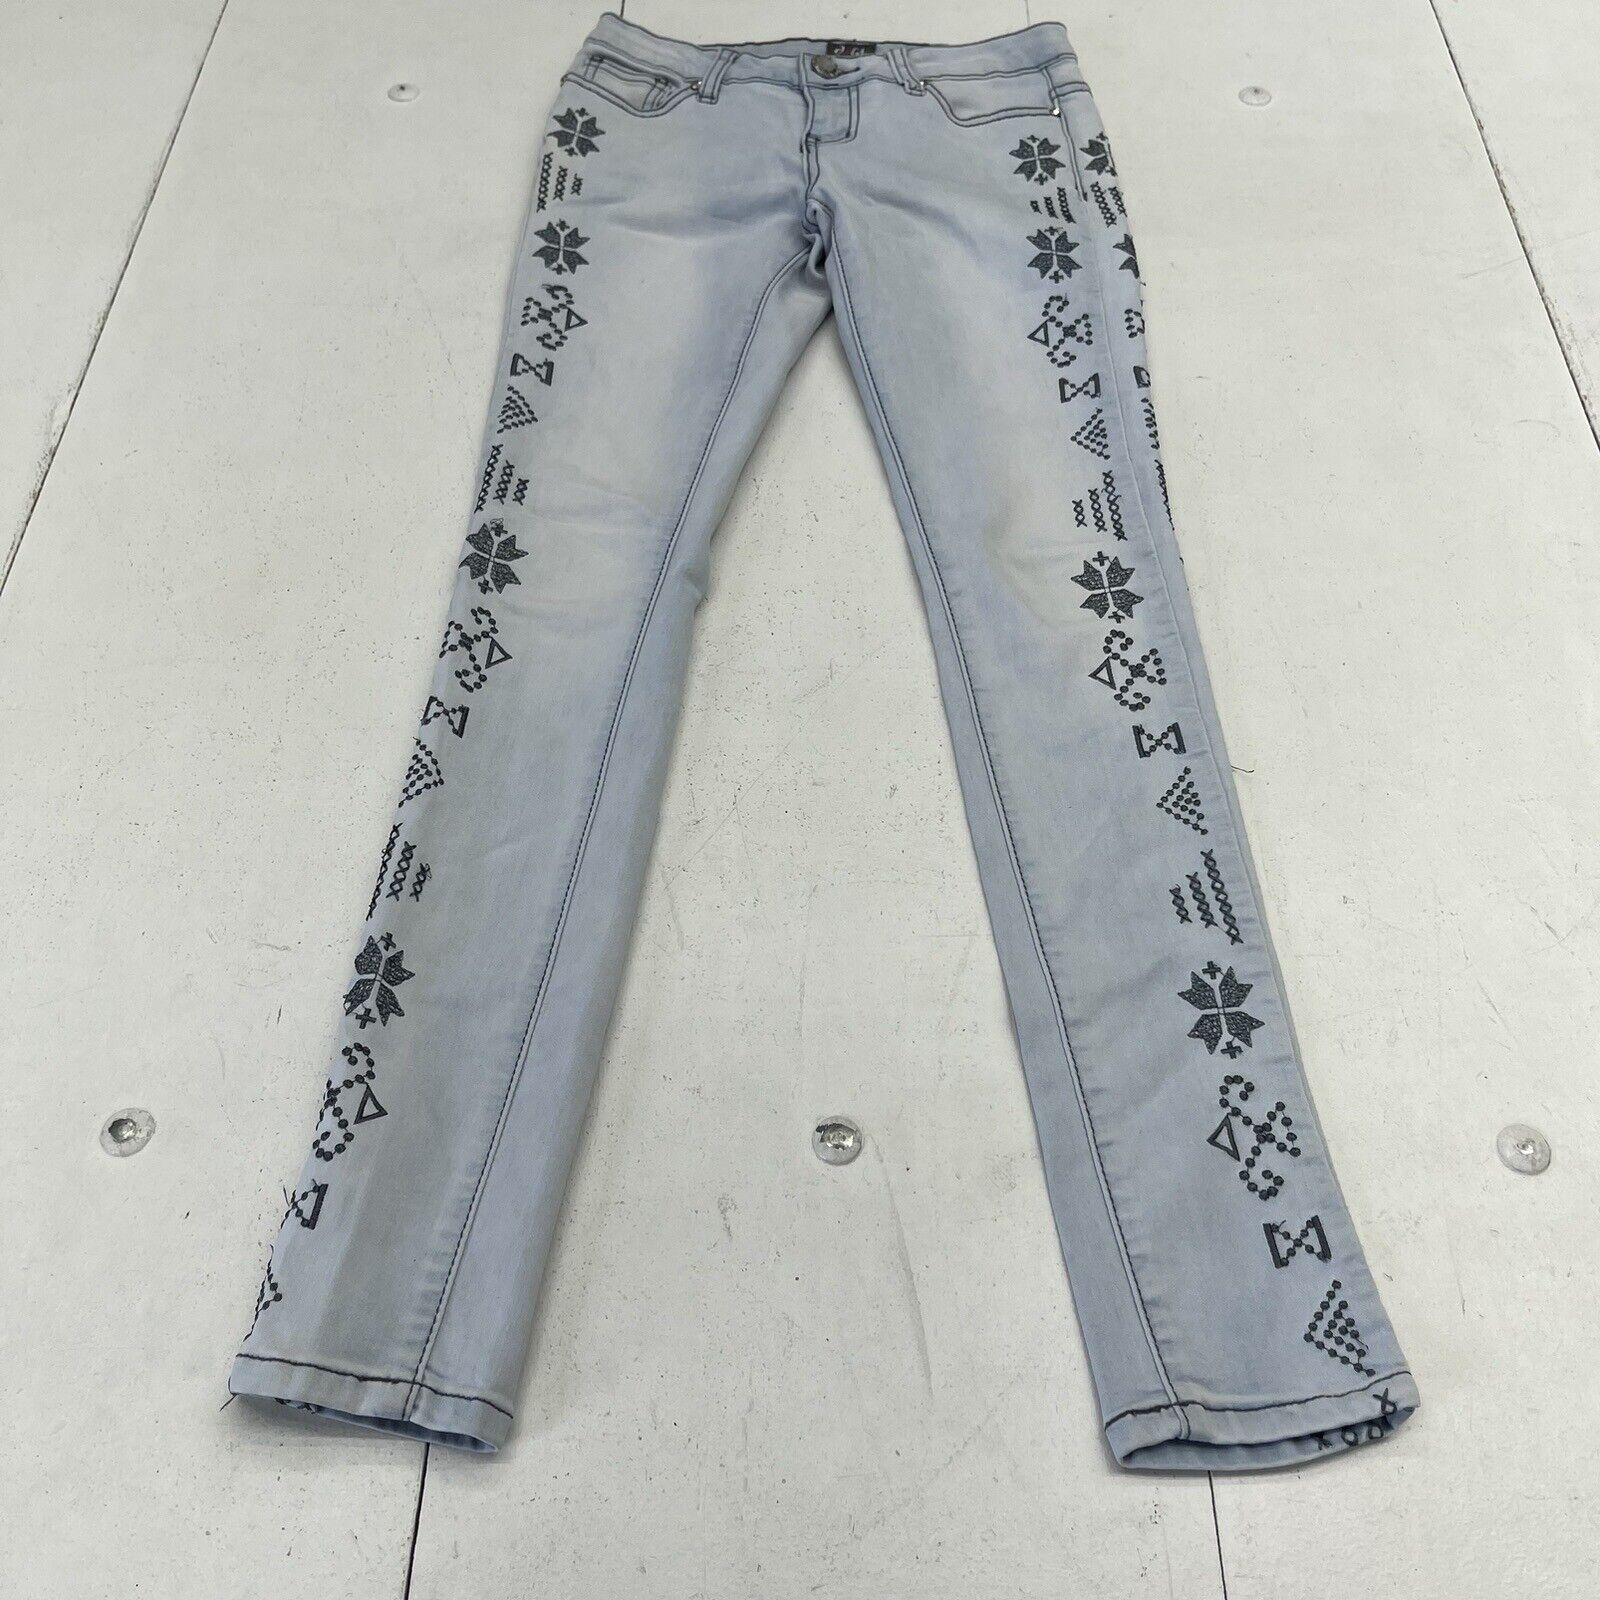 Blue Jeans Back Pockets Paint Spots Stock Photo 1484324087 | Shutterstock